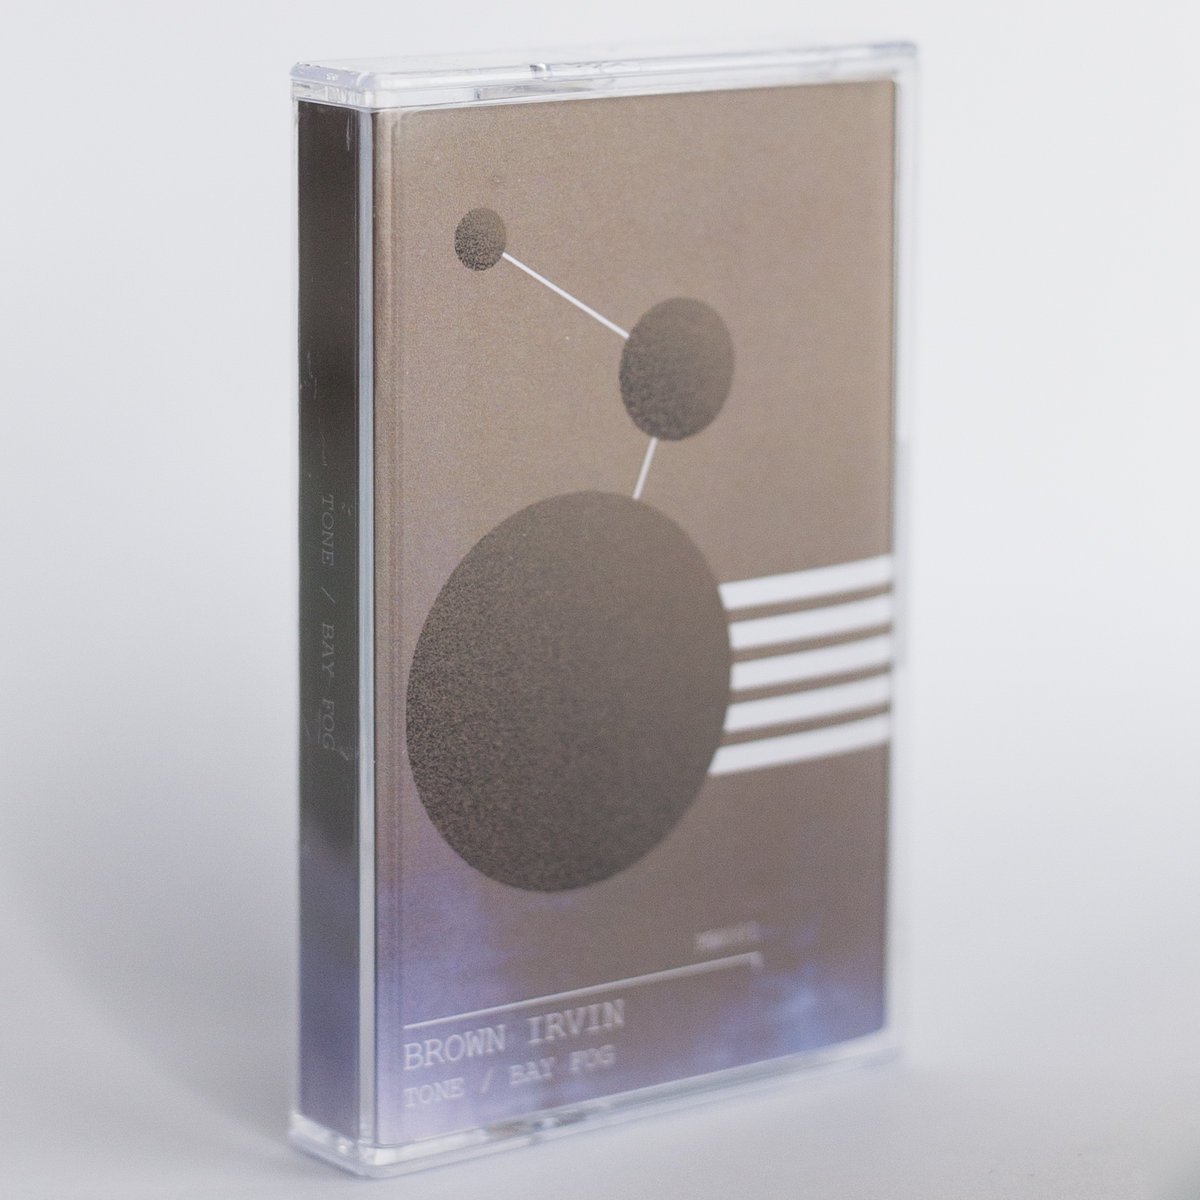 Brown Irvin - 'Tone / Bay Fog' Cassette tape (Motion Ward)